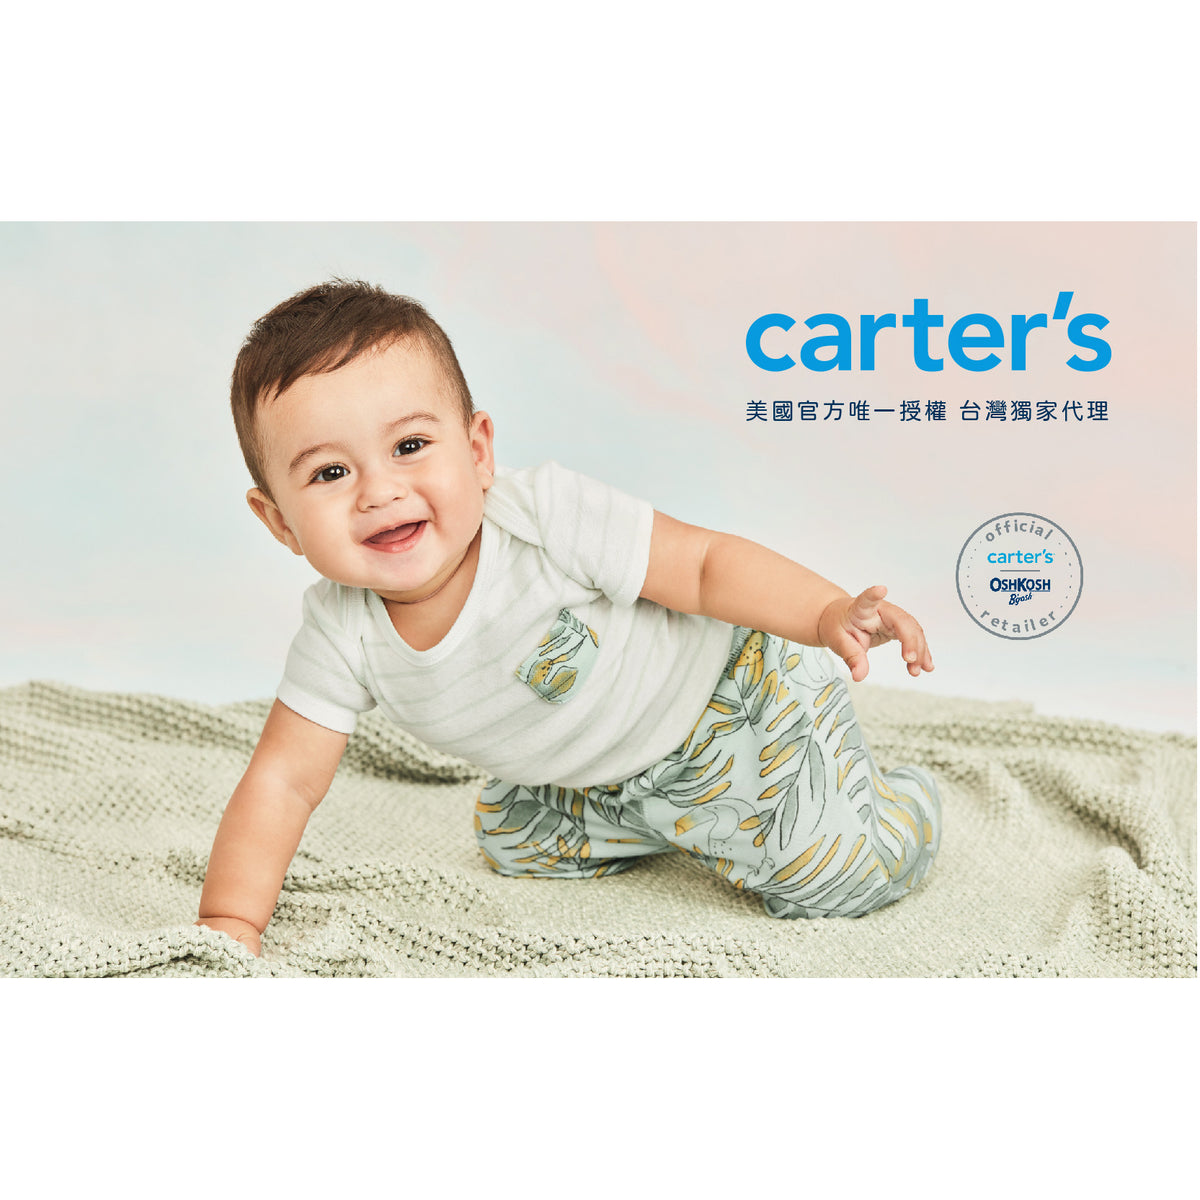 Carter's 百搭橄欖間隔2件組套裝(6M-24M)